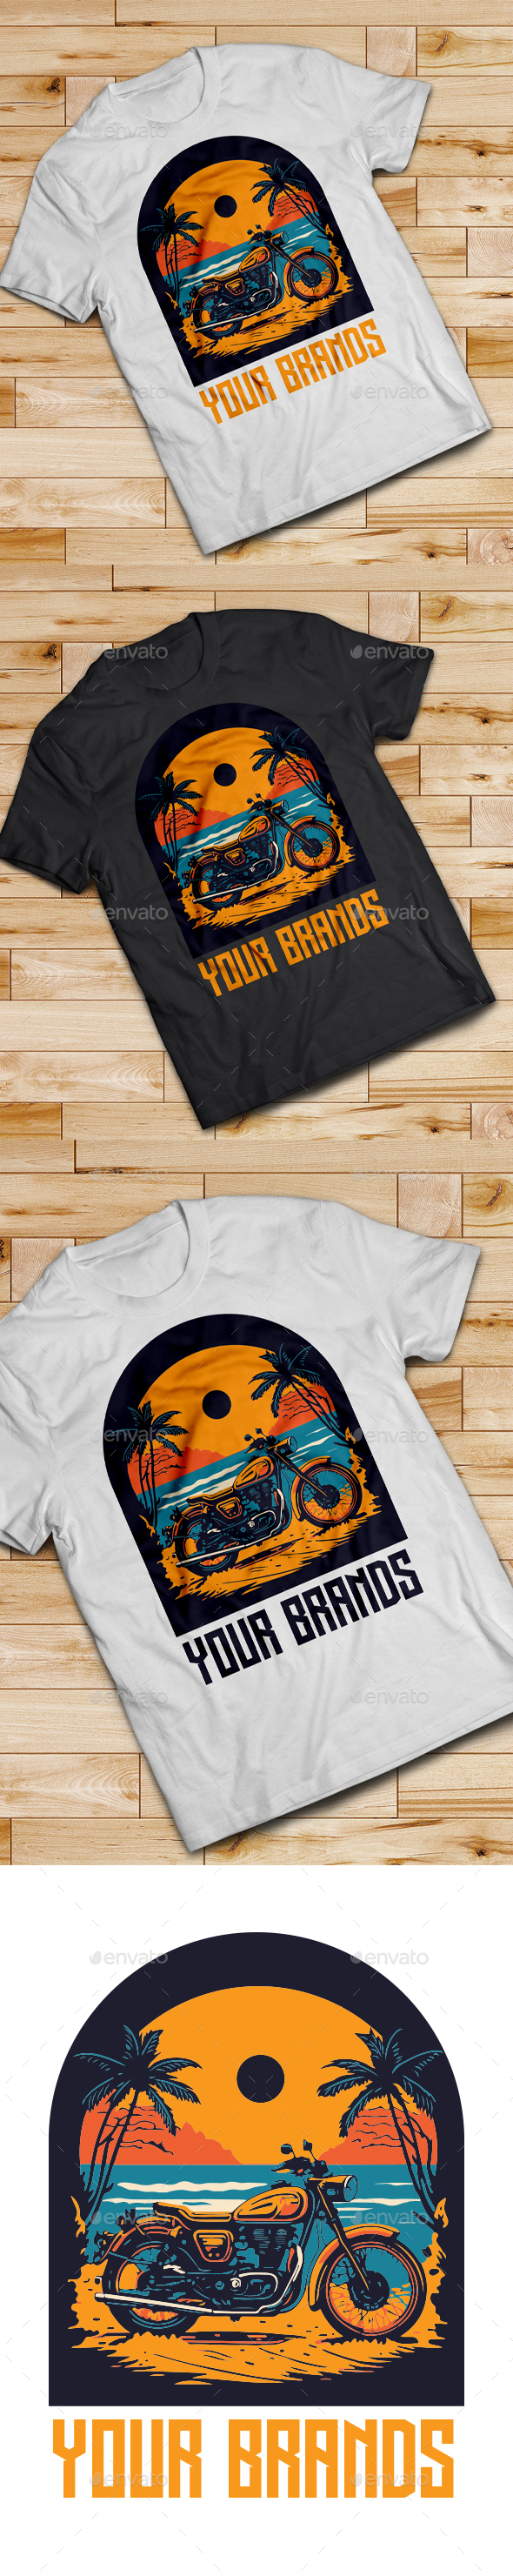 Motorbike T-shirt Design Grunge Style